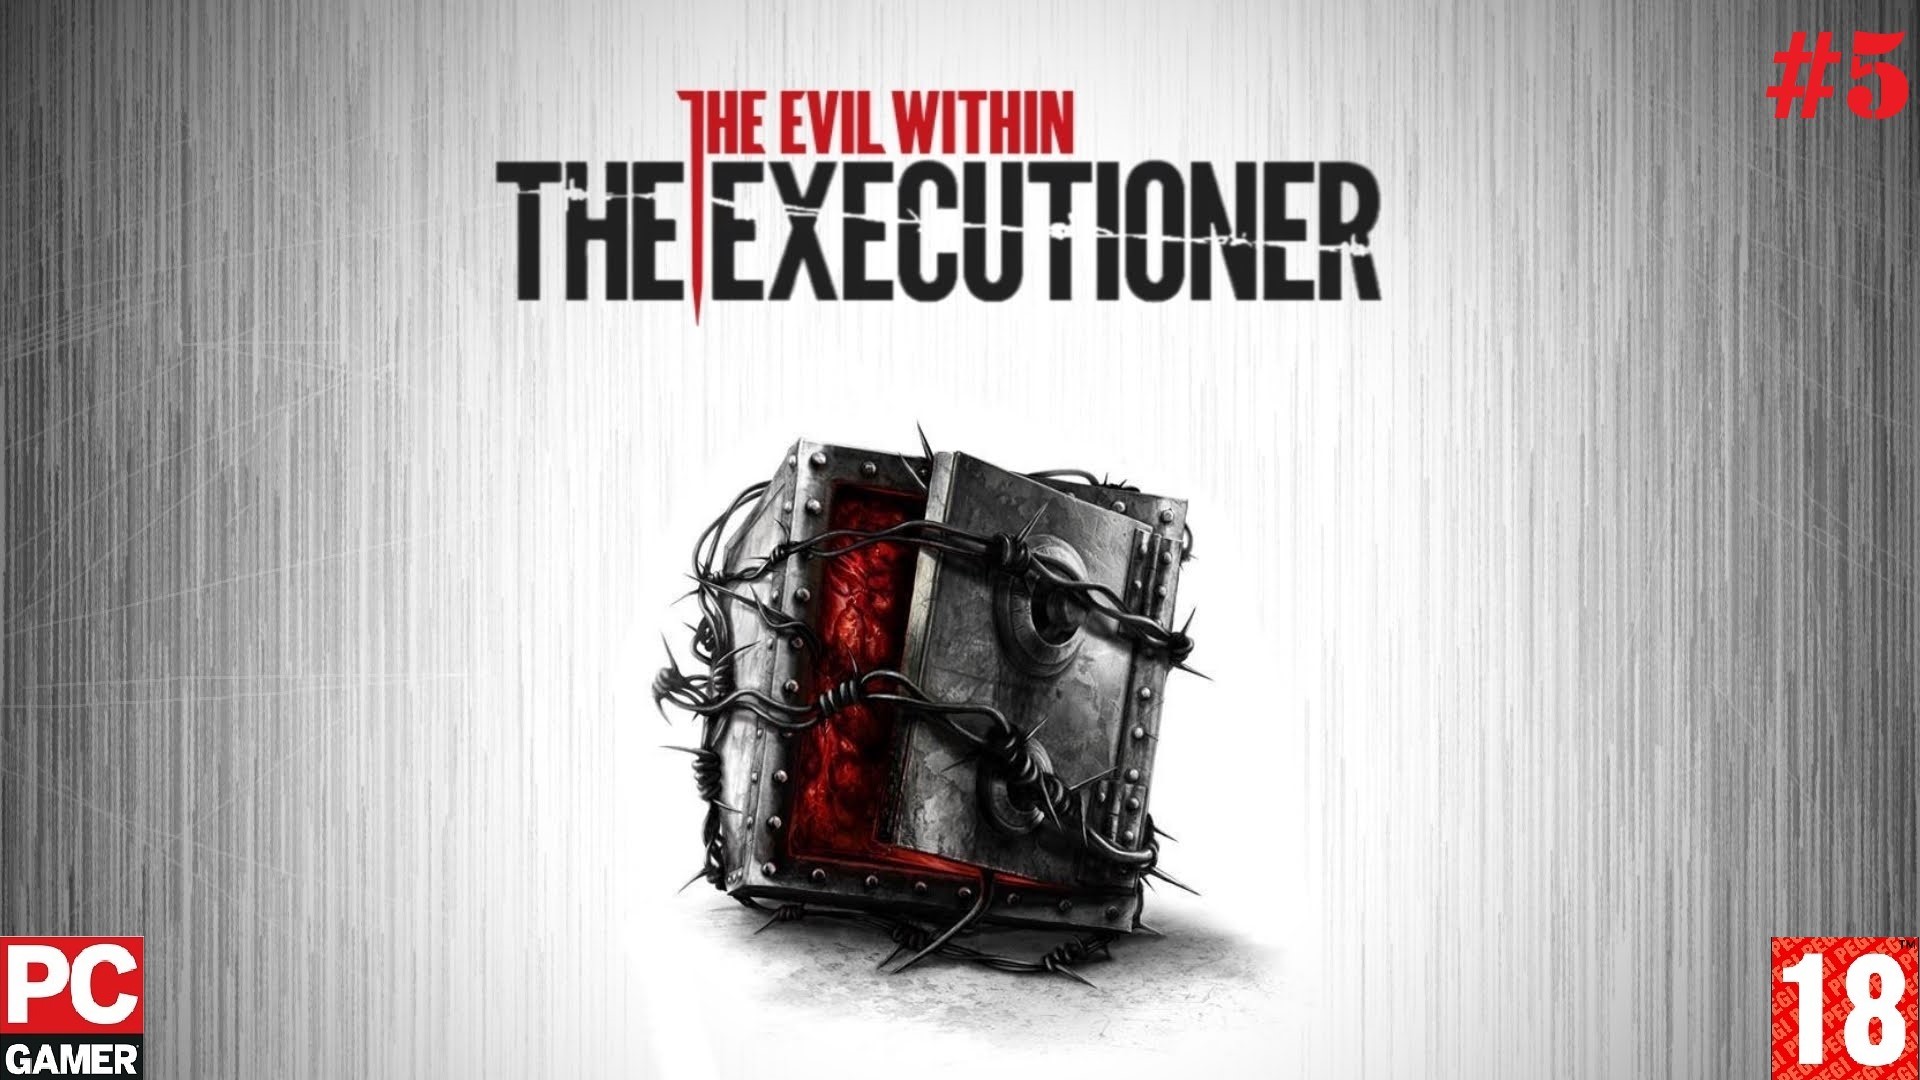 The Evil Within: The Execcutioner(PC) - Прохождение #5, DLC. (без комментариев) на Русском.